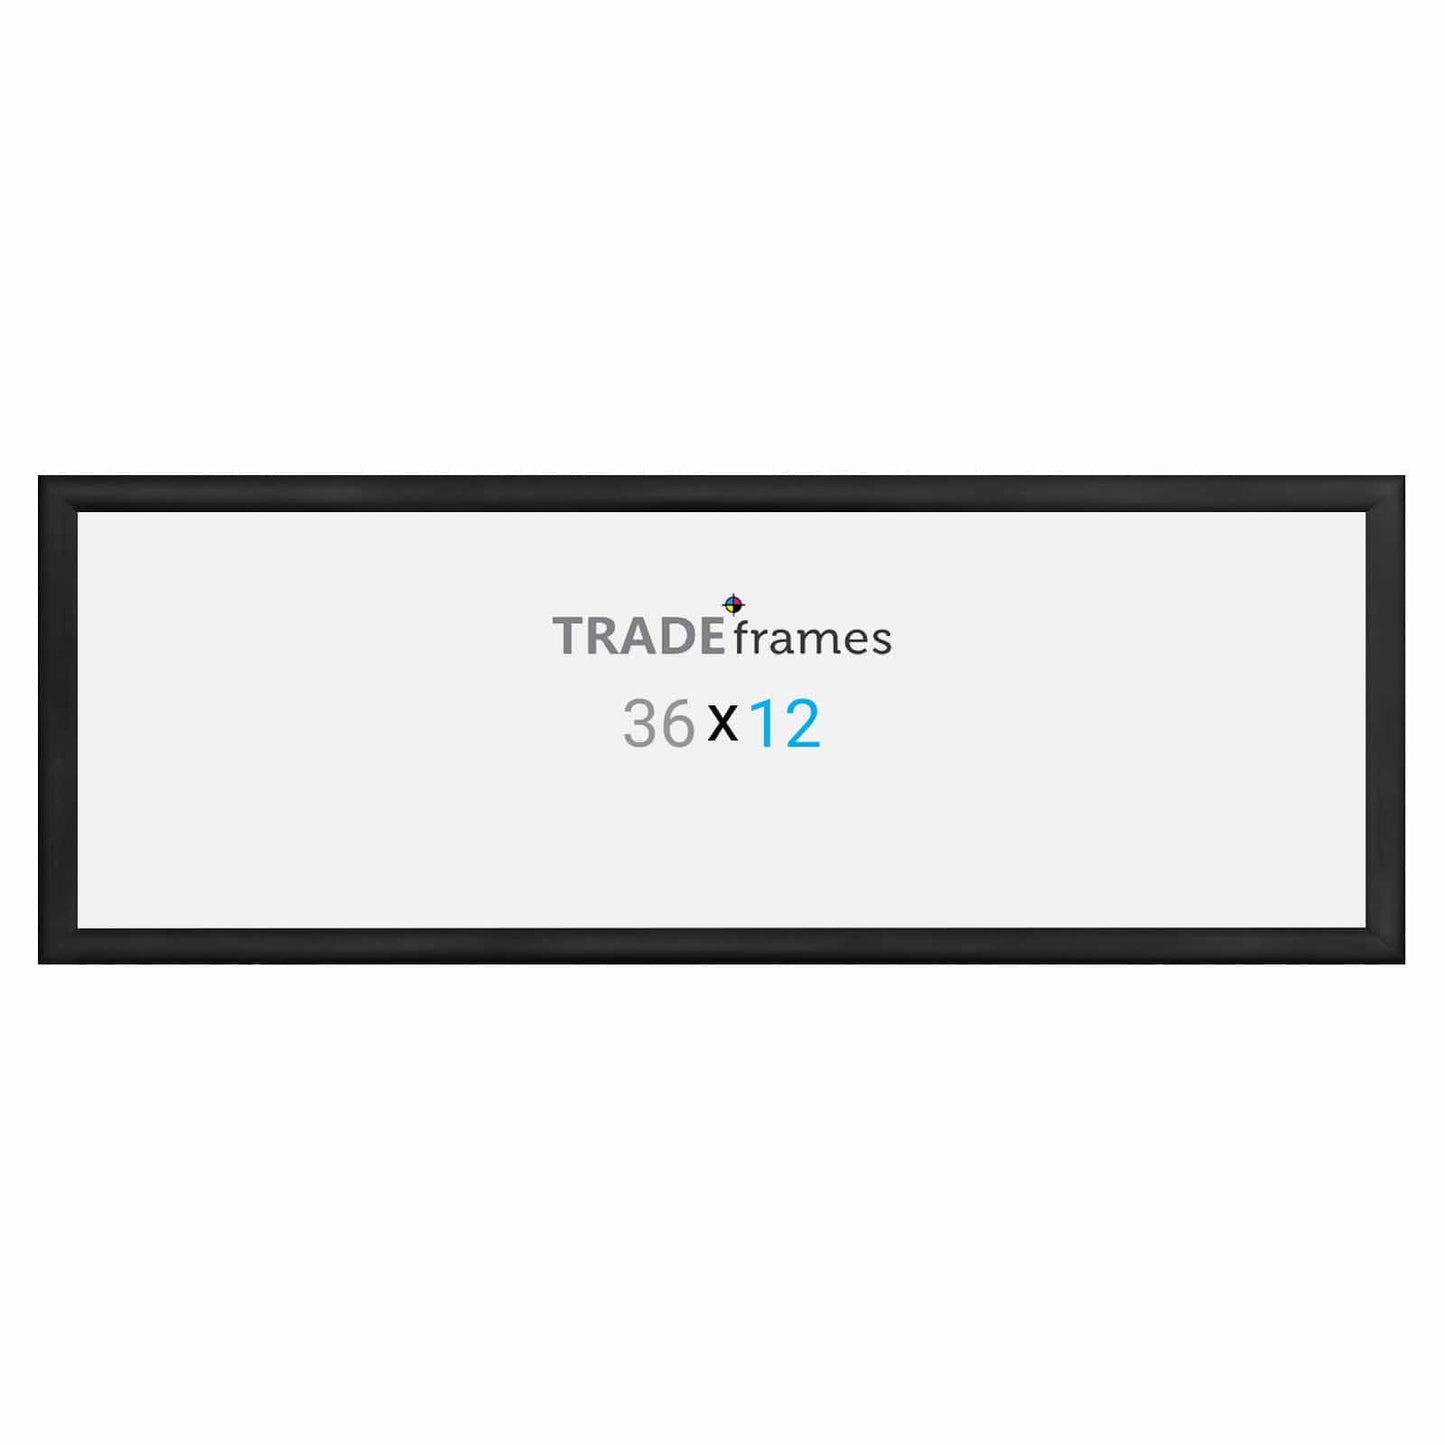 12x36 TRADEframe Black Snap Frame 12x36 - 1.2 inch profile - Snap Frames Direct